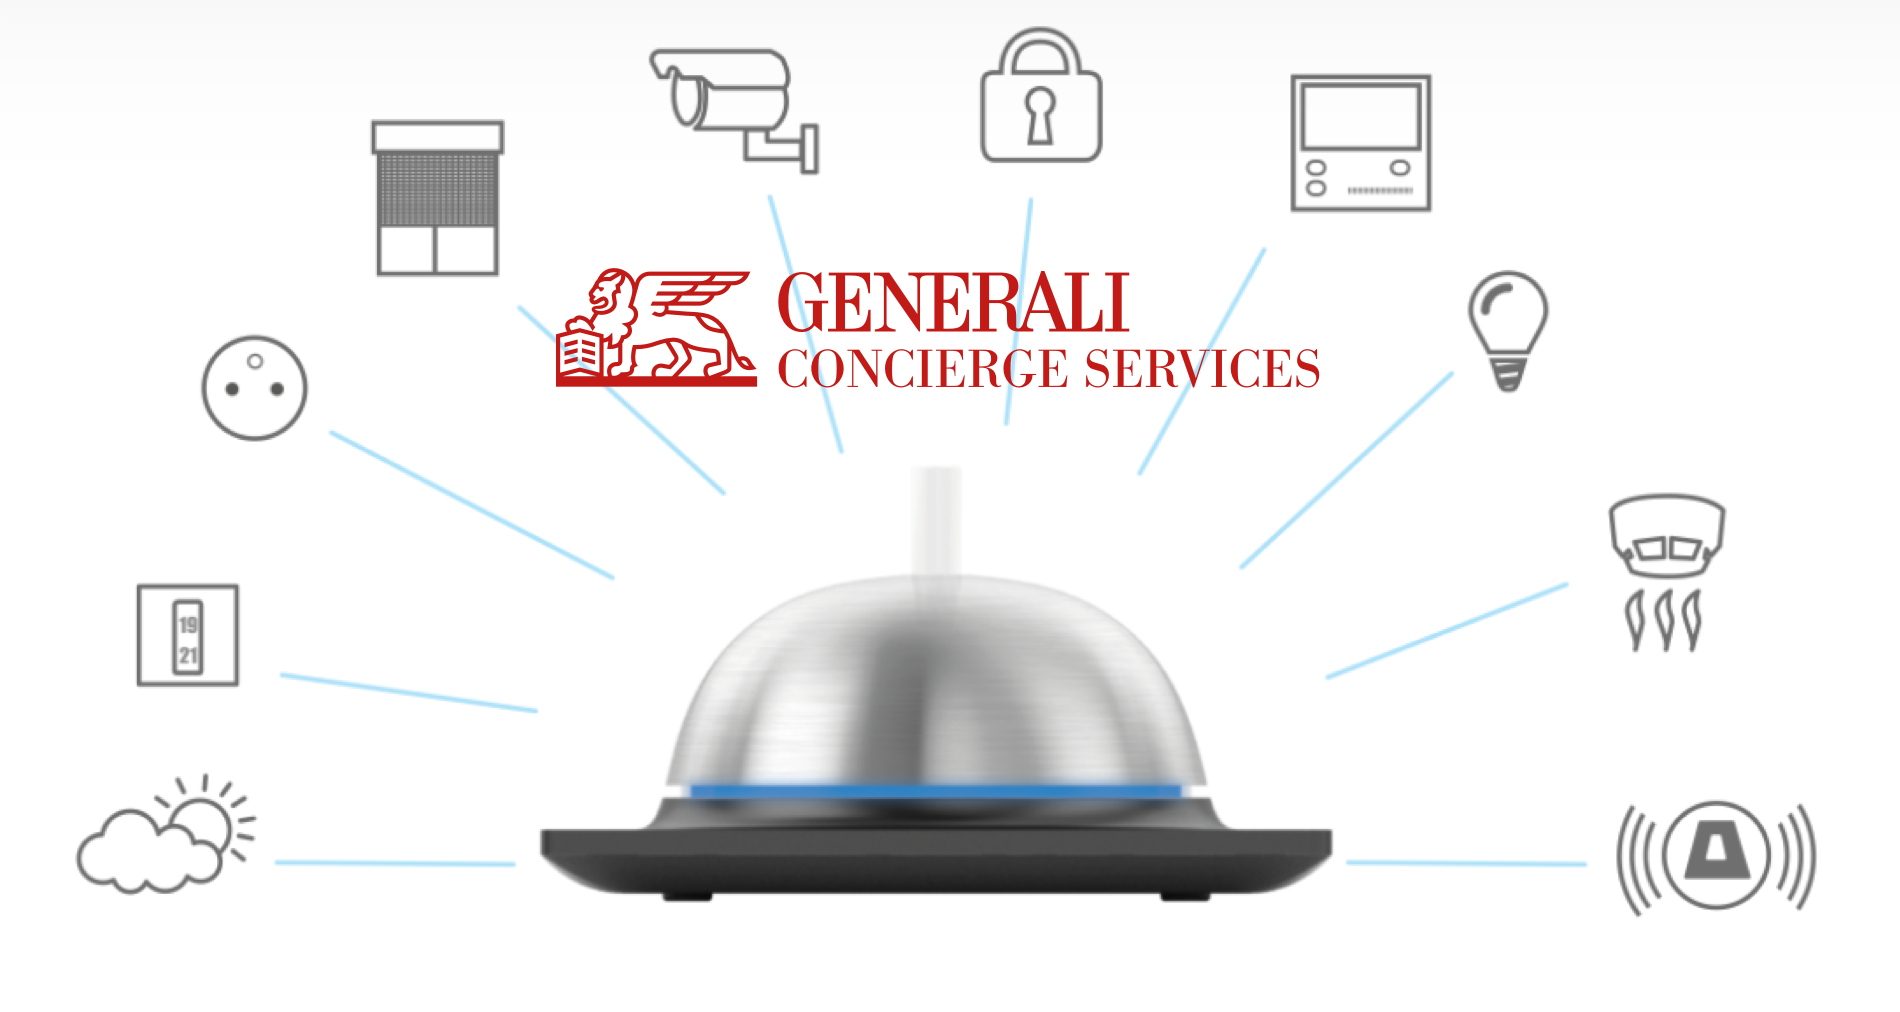 Generali concierge services